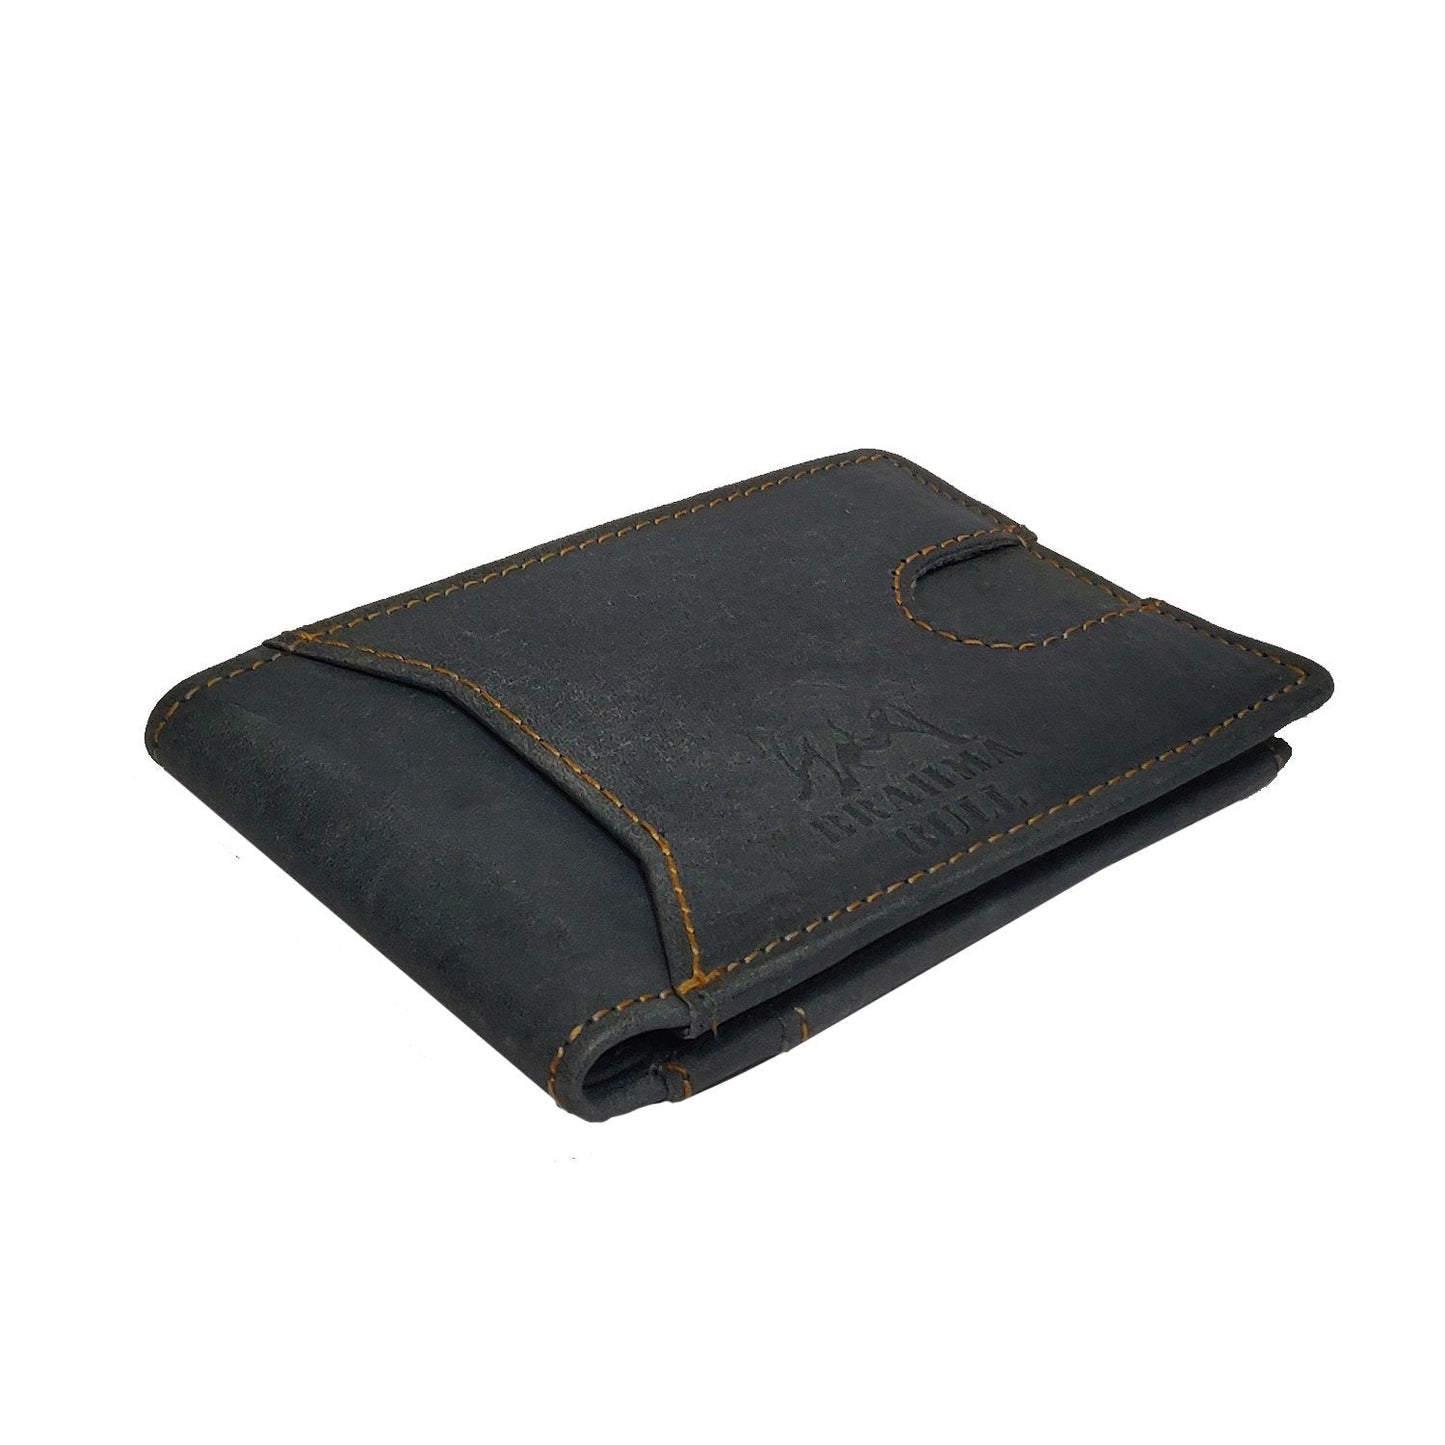 Brahma Bull Slim Edition Multi Purpose Leather Wallet - Navy - Brahma Bull